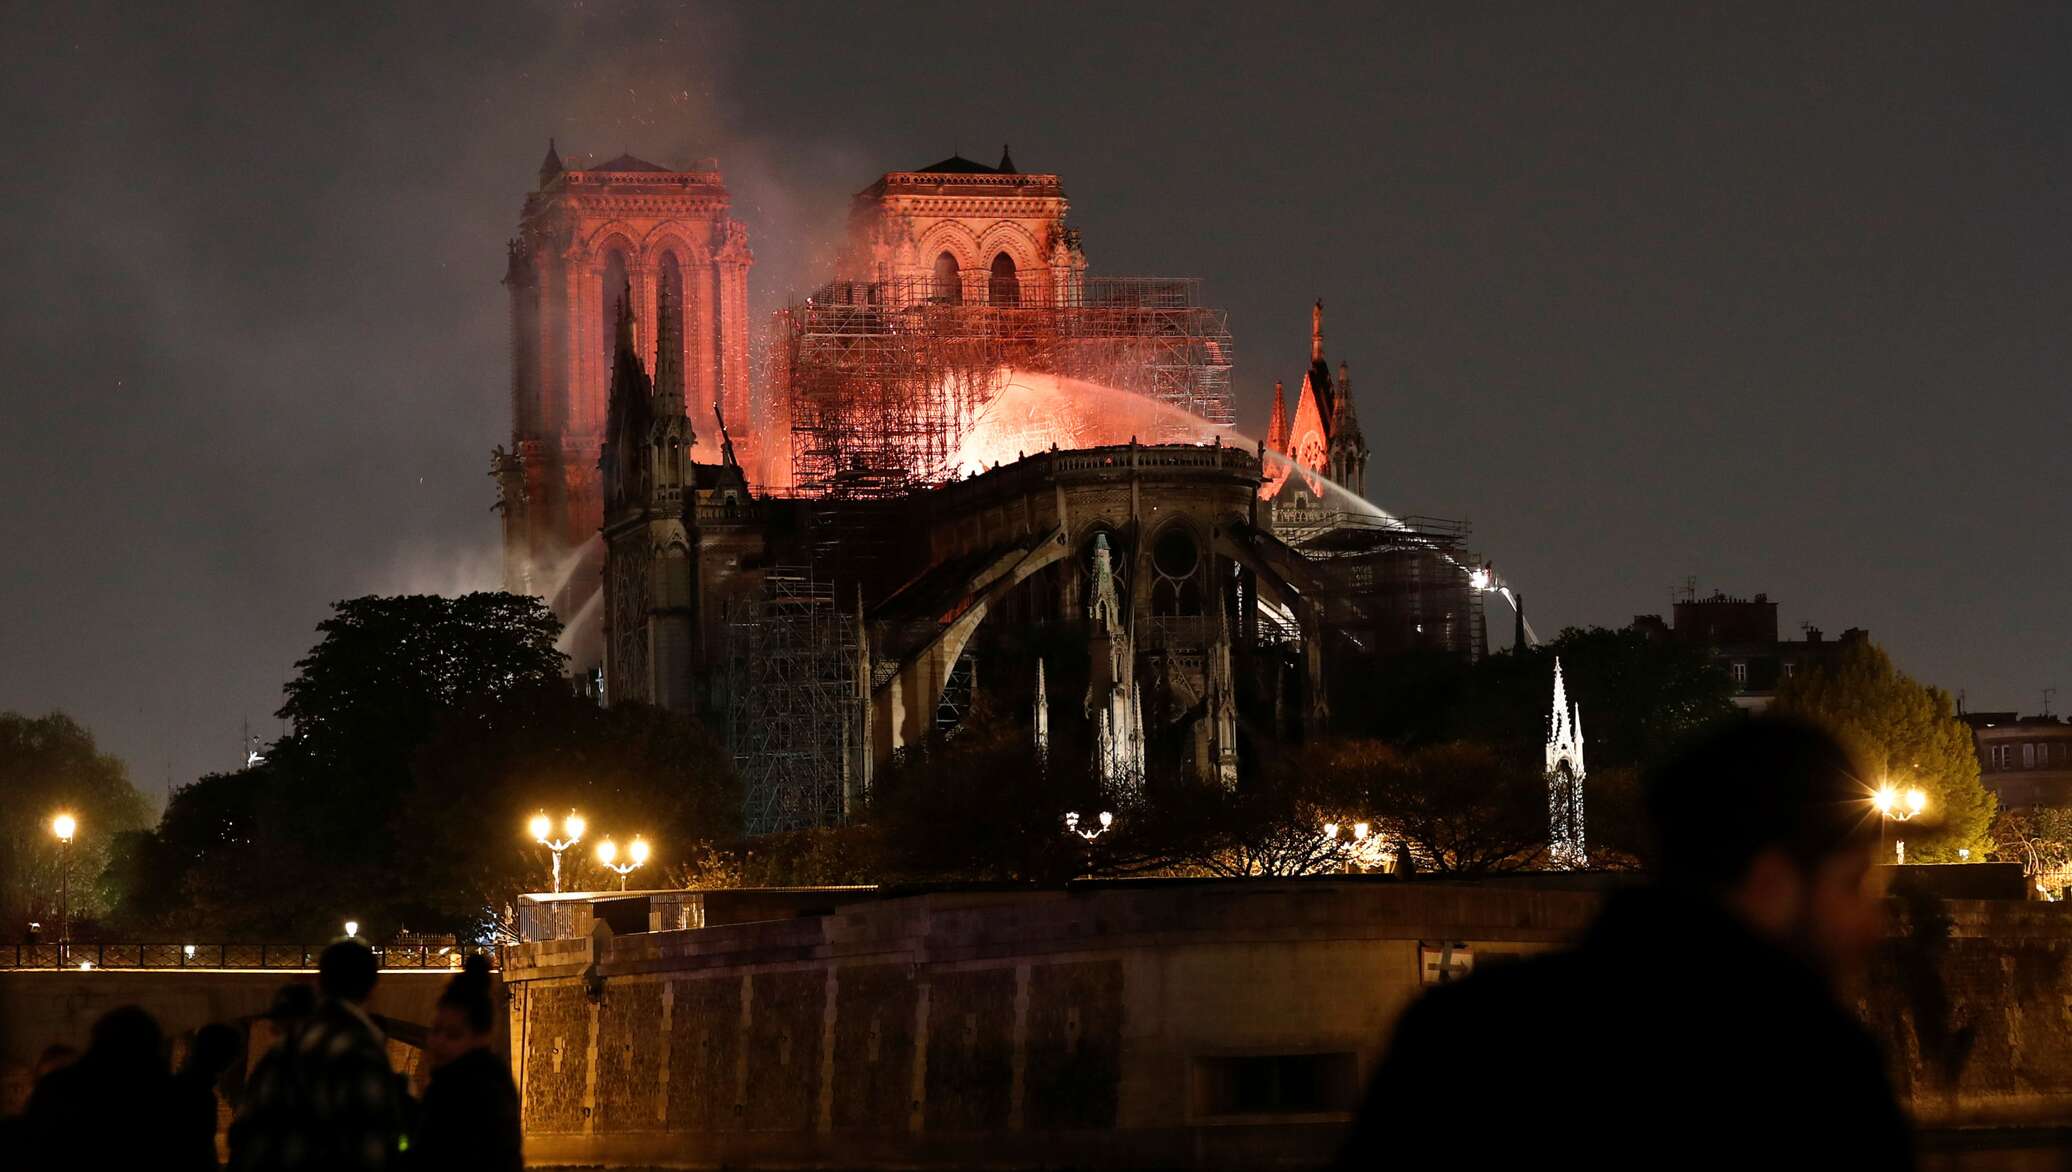 Собор парижской богоматери фото до пожара снаружи